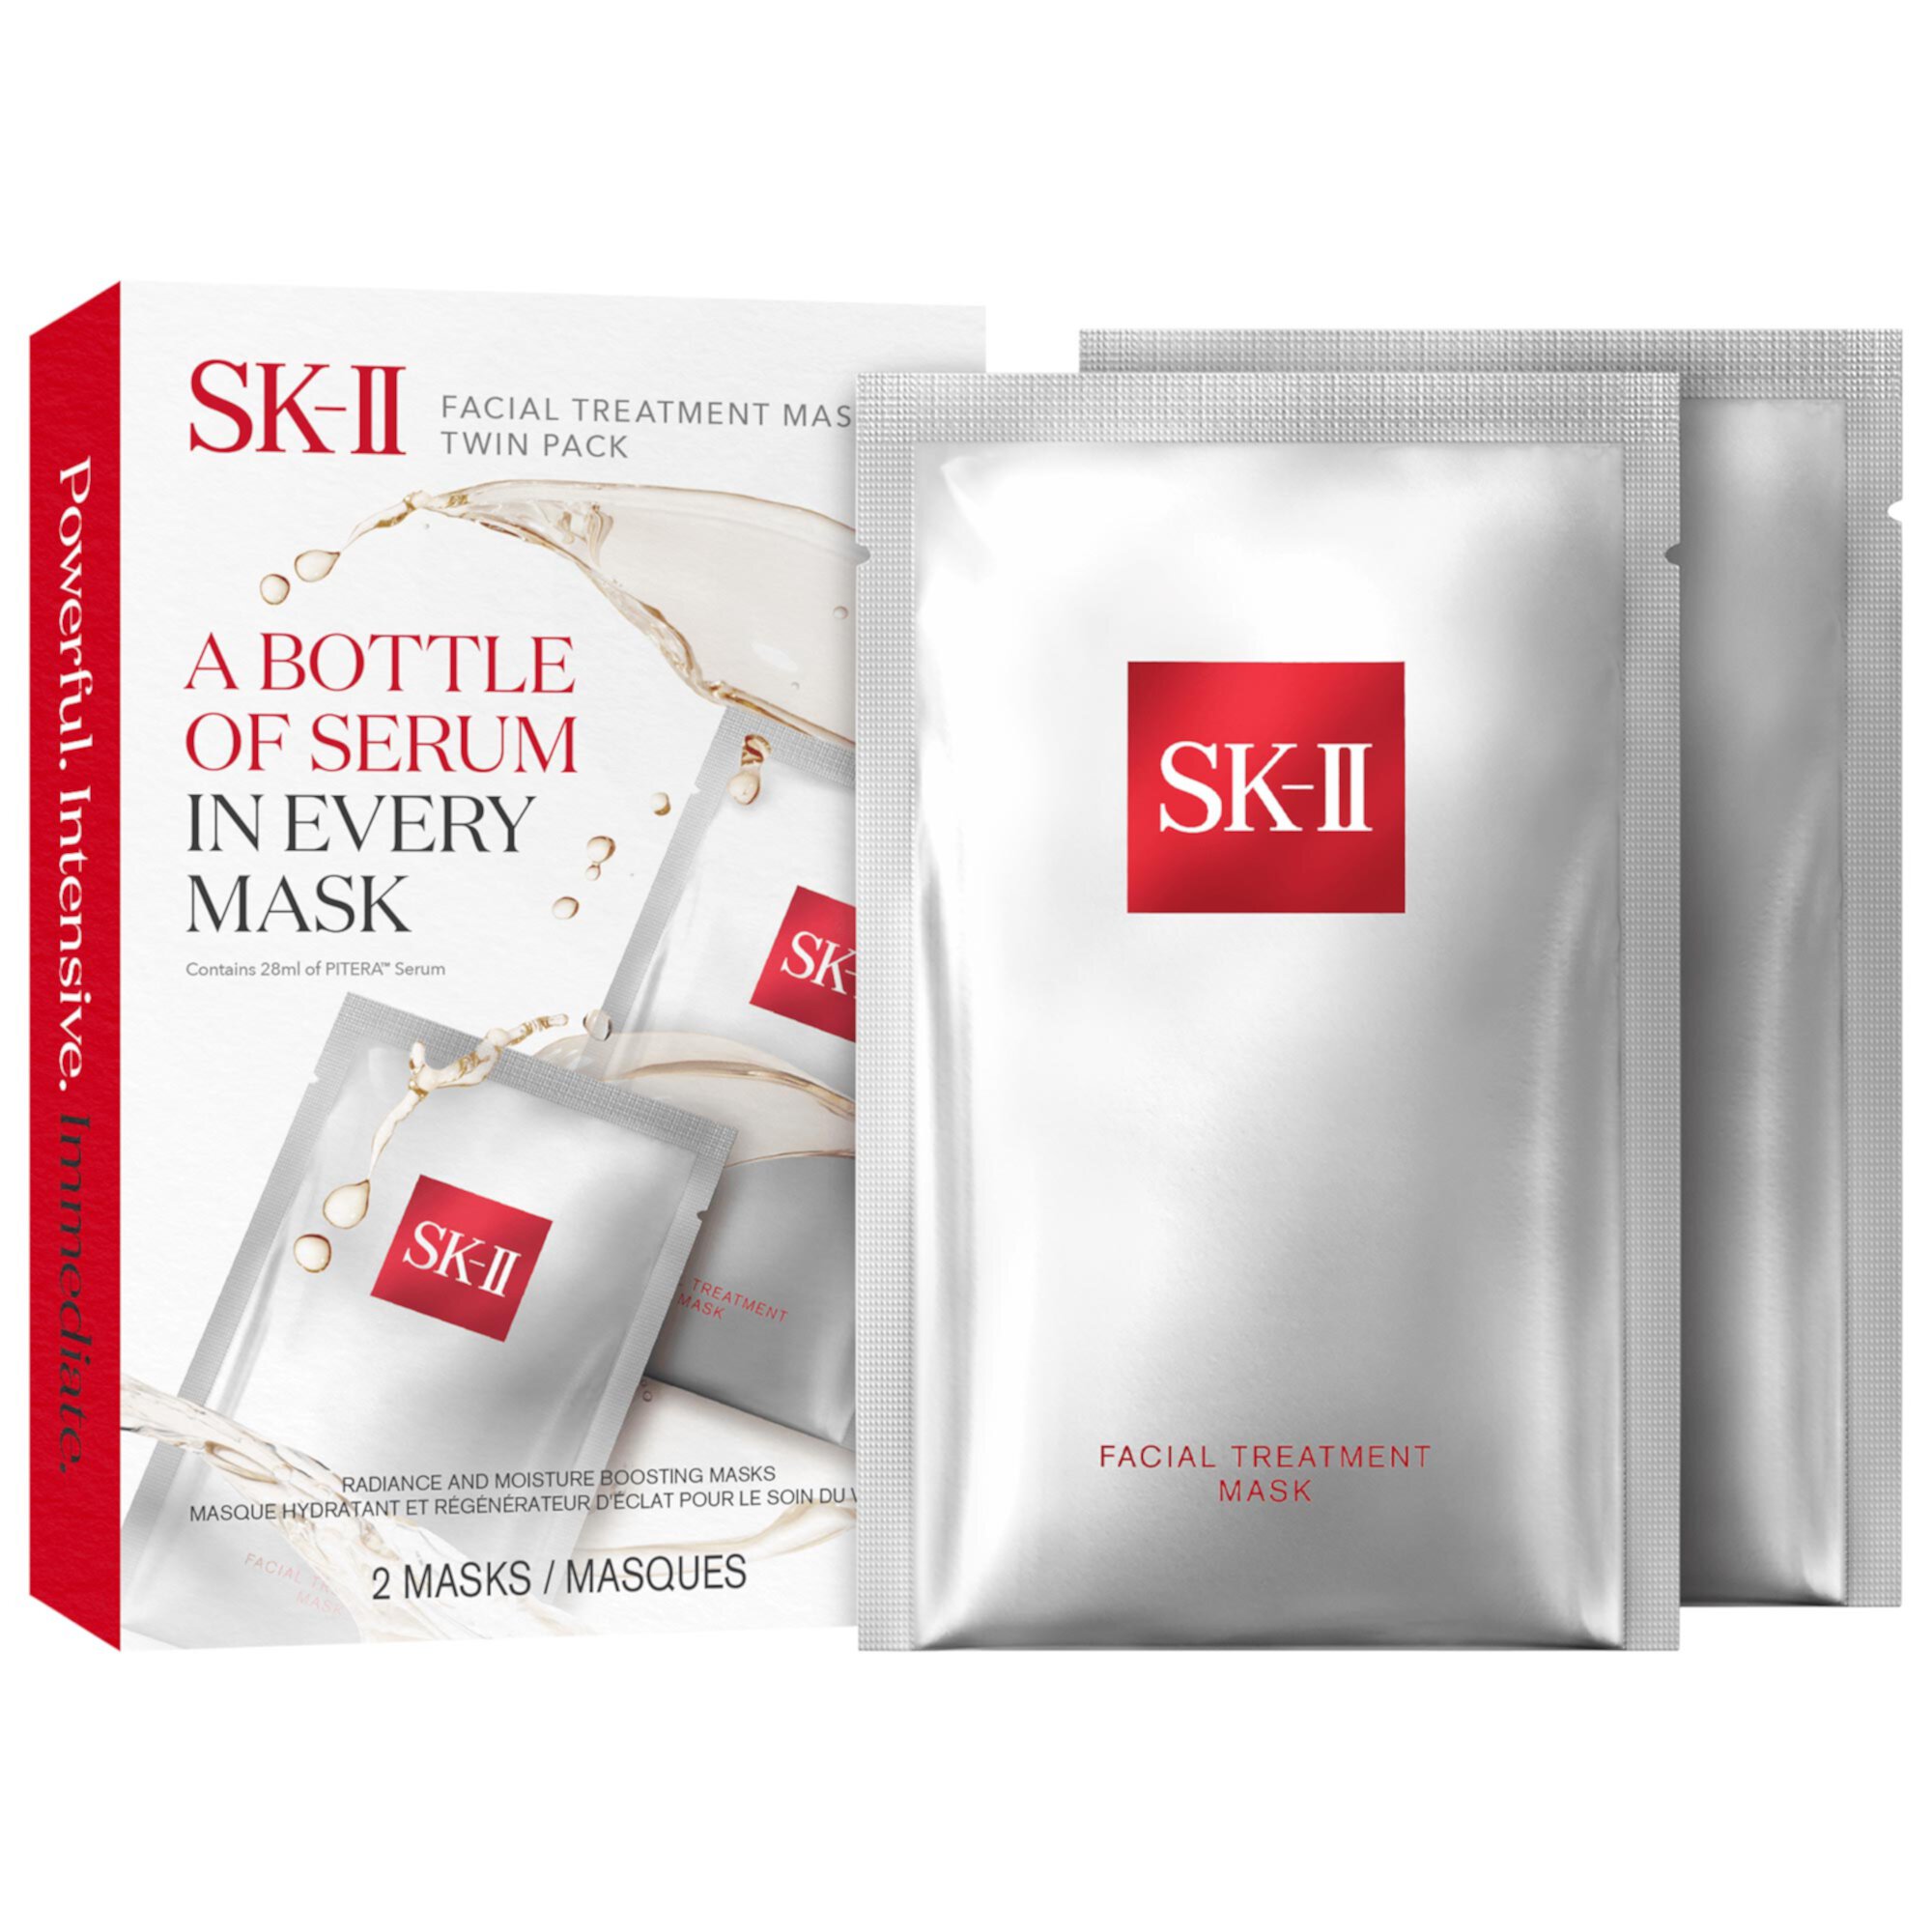 PITERA™ Facial Treatment Mask Twin Pack SK-II